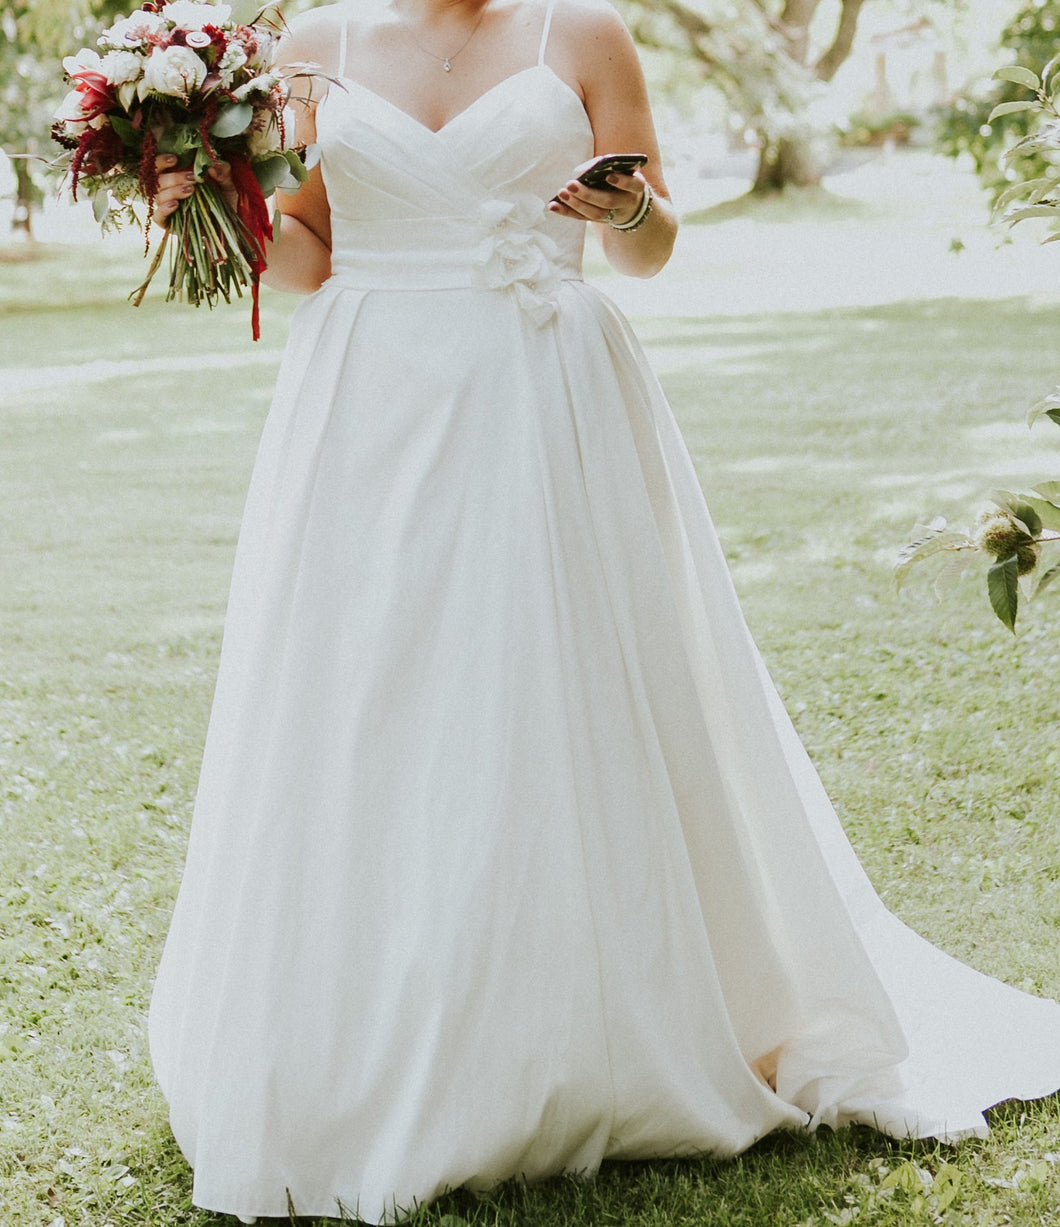 Stella york '5679 FL' wedding dress size-12 PREOWNED